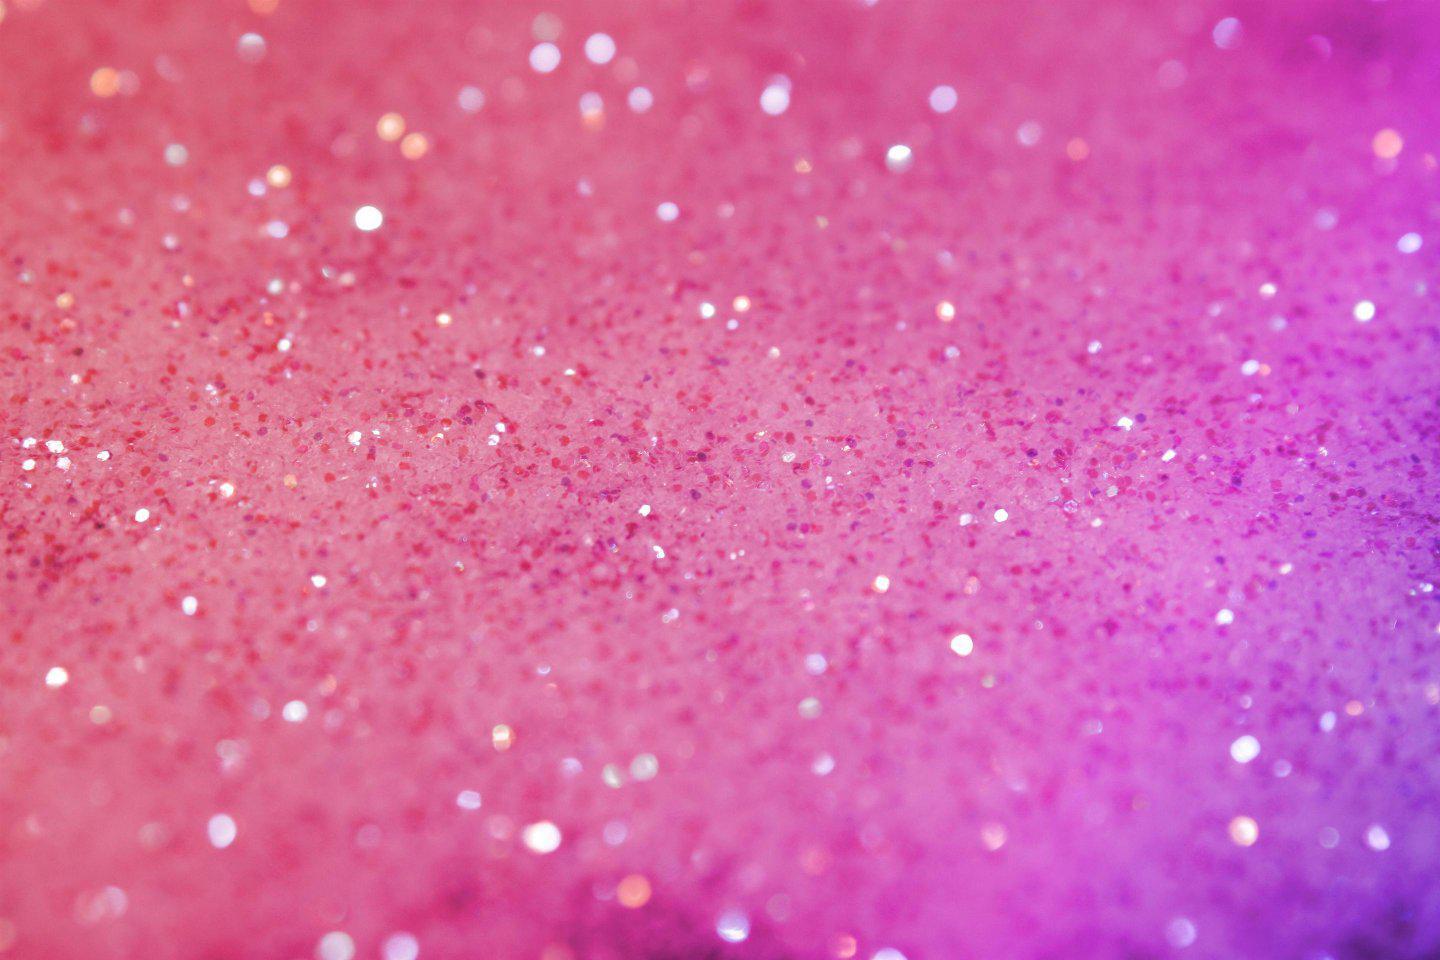 Pink Glitter Wallpaper HD